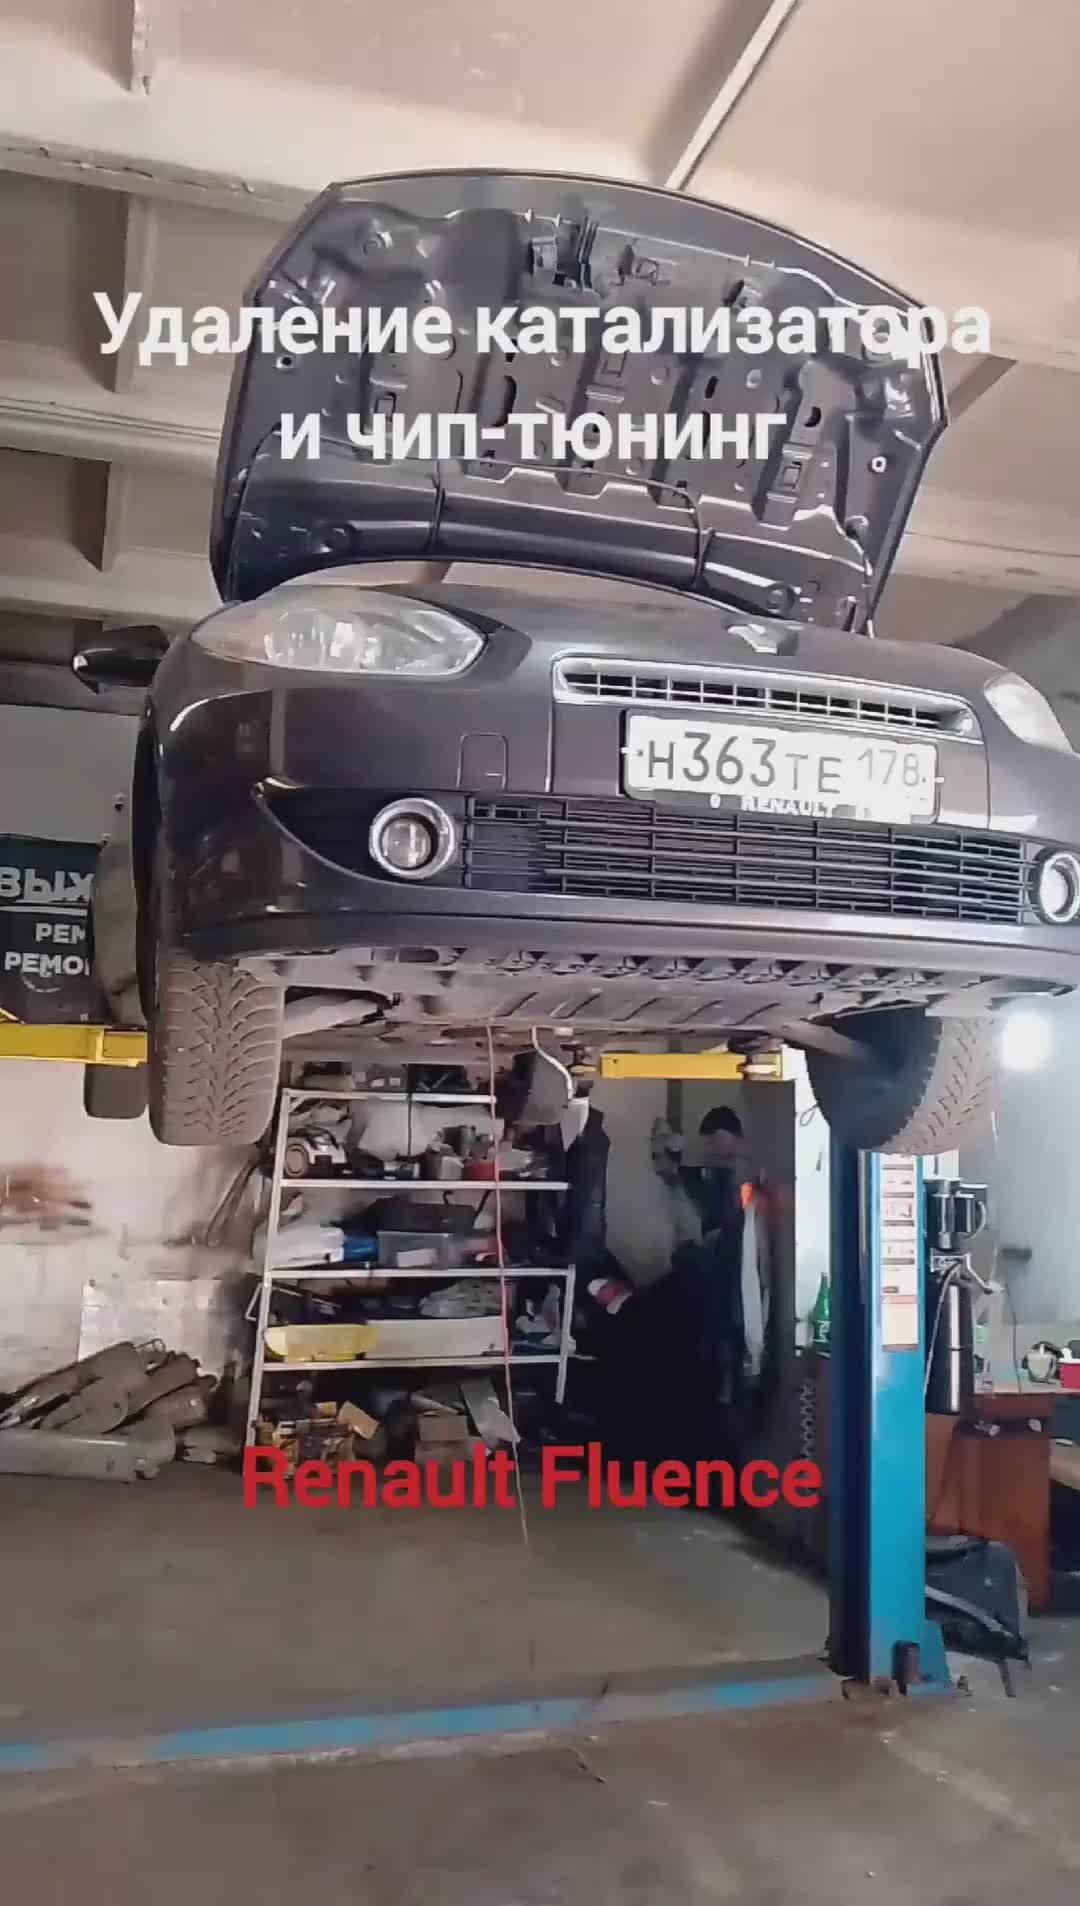 Рено флюенс ремонт кузова в Нижнем Новгороде Renault Fluencе Auto body repair - Video